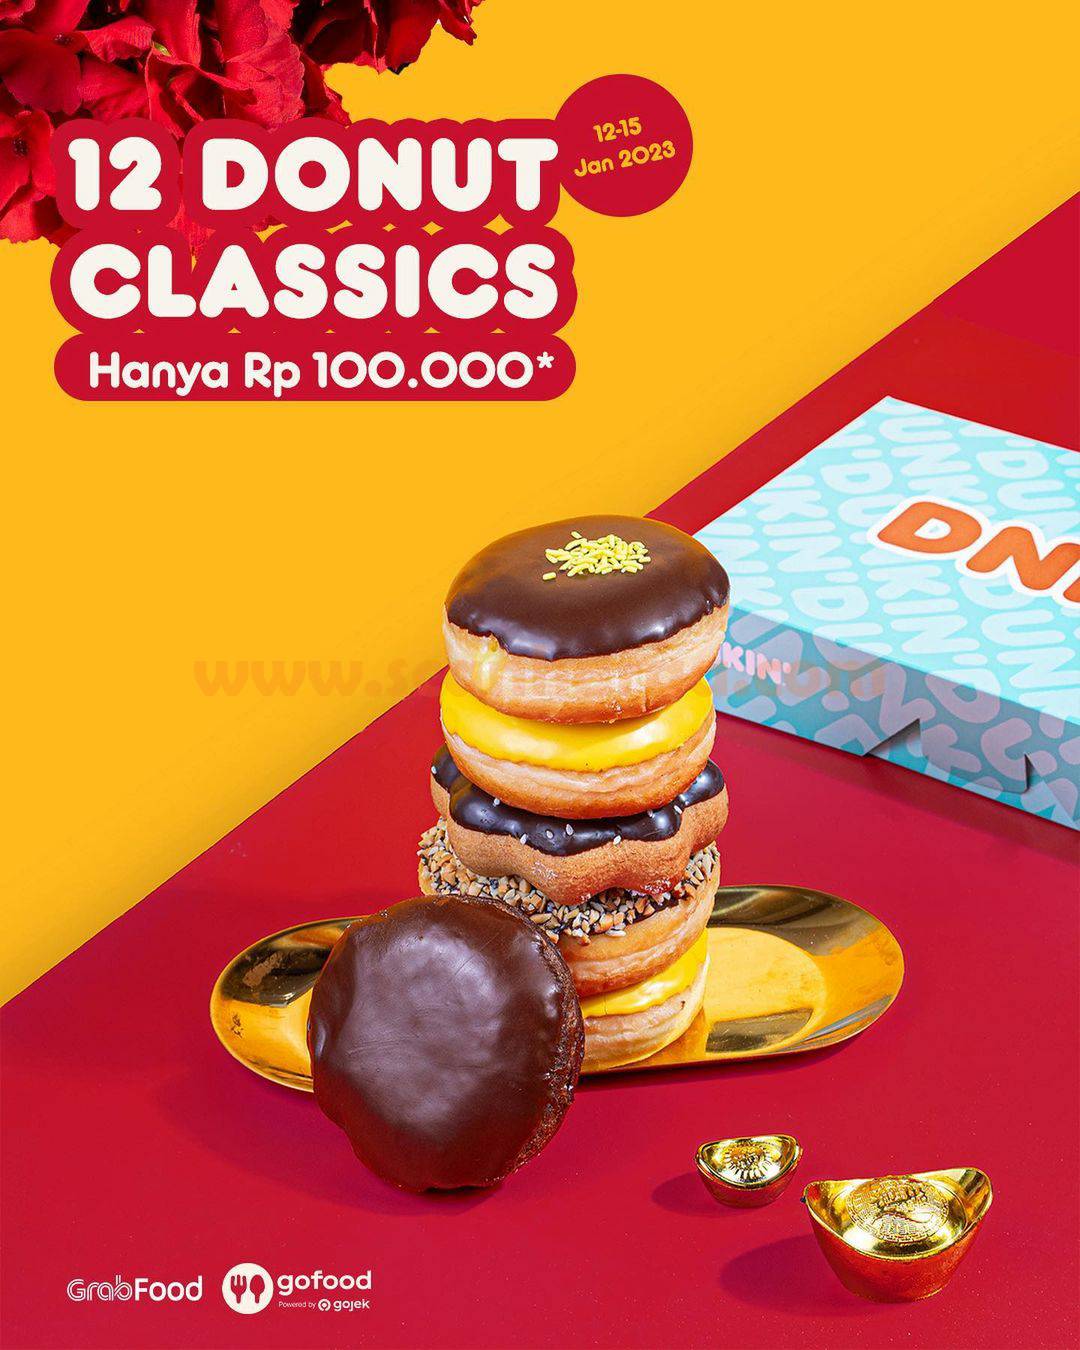 DUNKIN DONUTS Promo 12 DONUTS hanya Rp 100.000